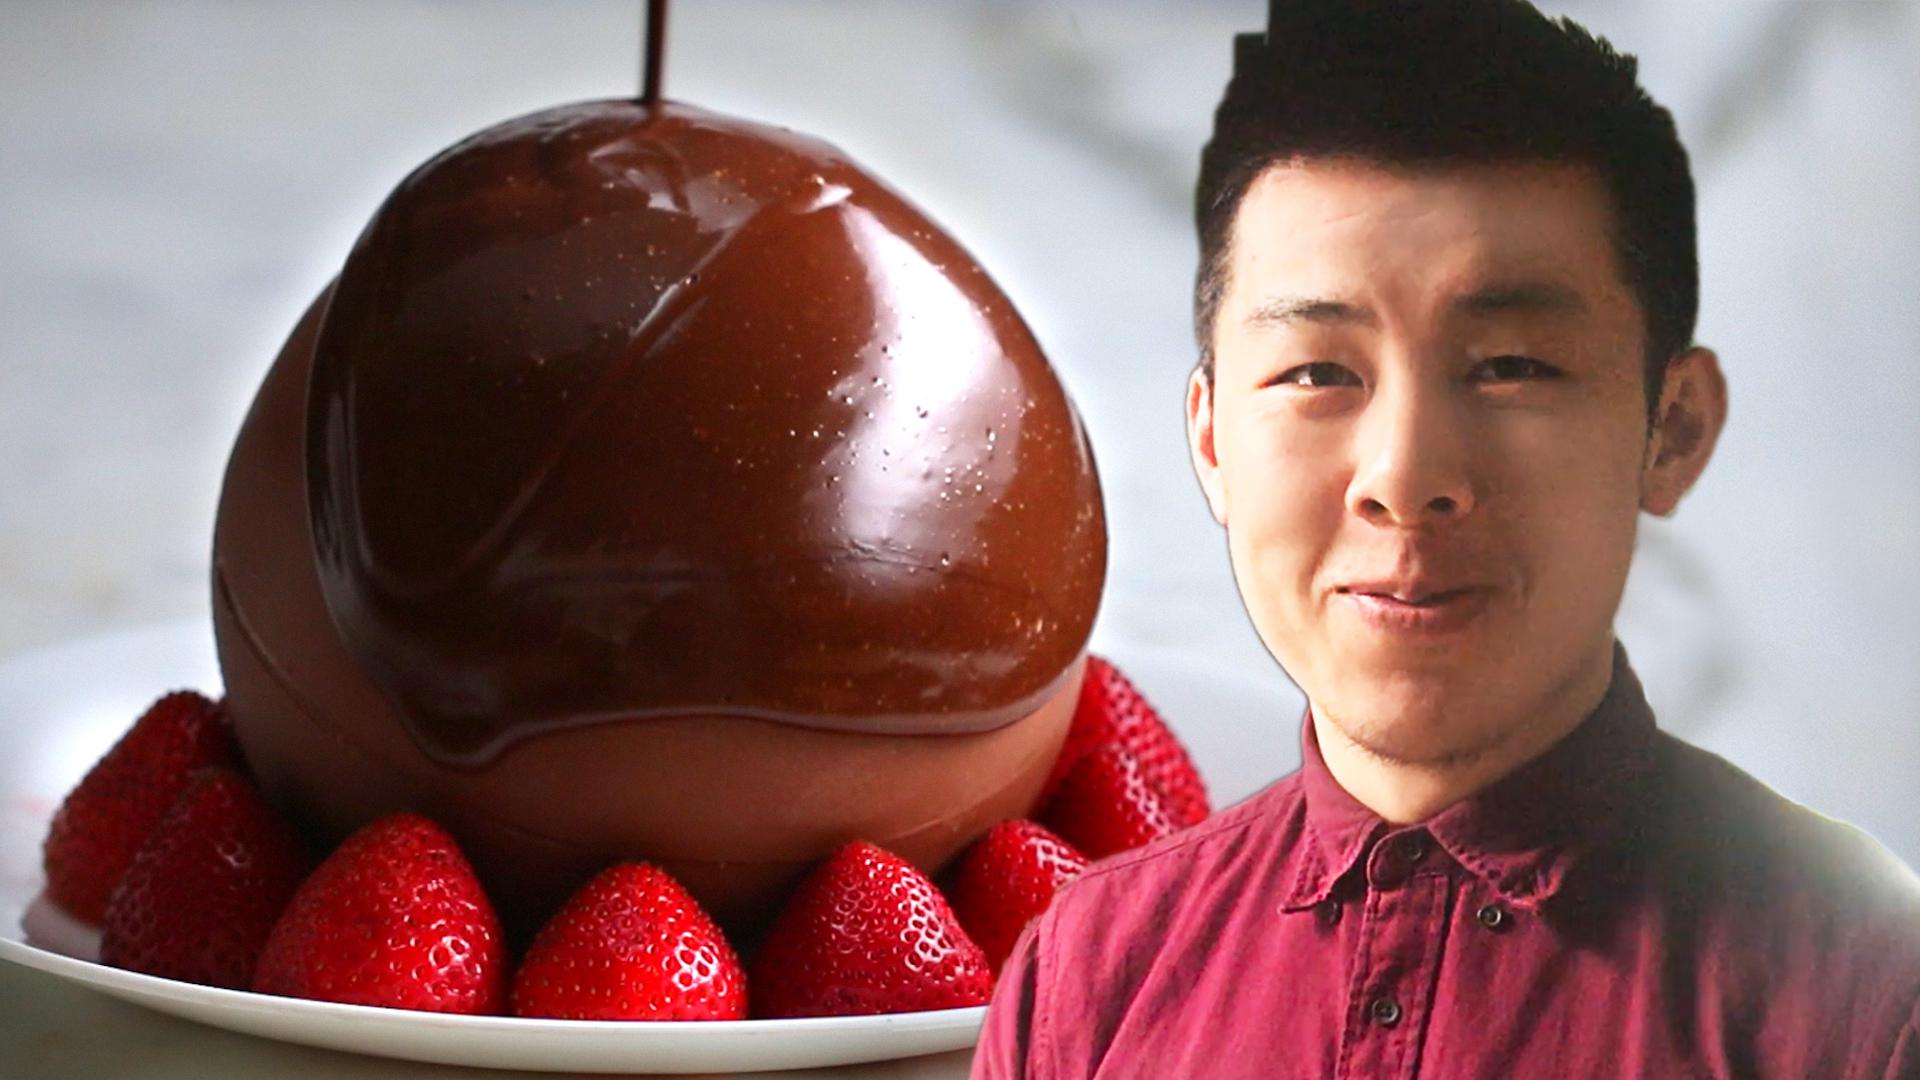 Magic Chocolate Ball: Behind Tasty.